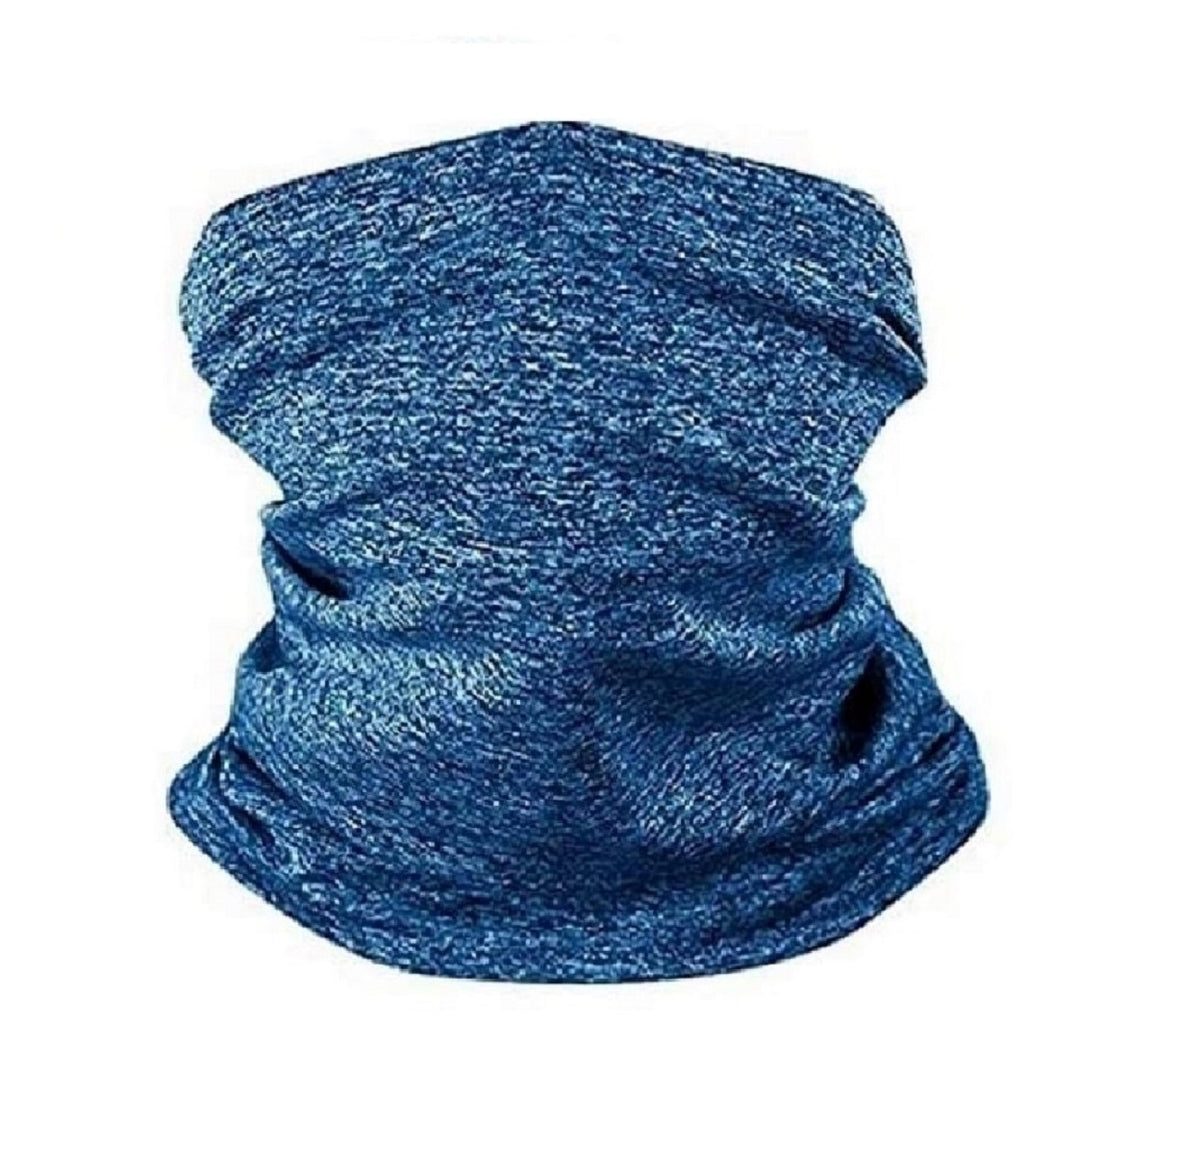 Magic Headwear Paris Outdoor Scarf Headbands Bandana Mask Neck Gaiter Head Wrap Mask Sweatband